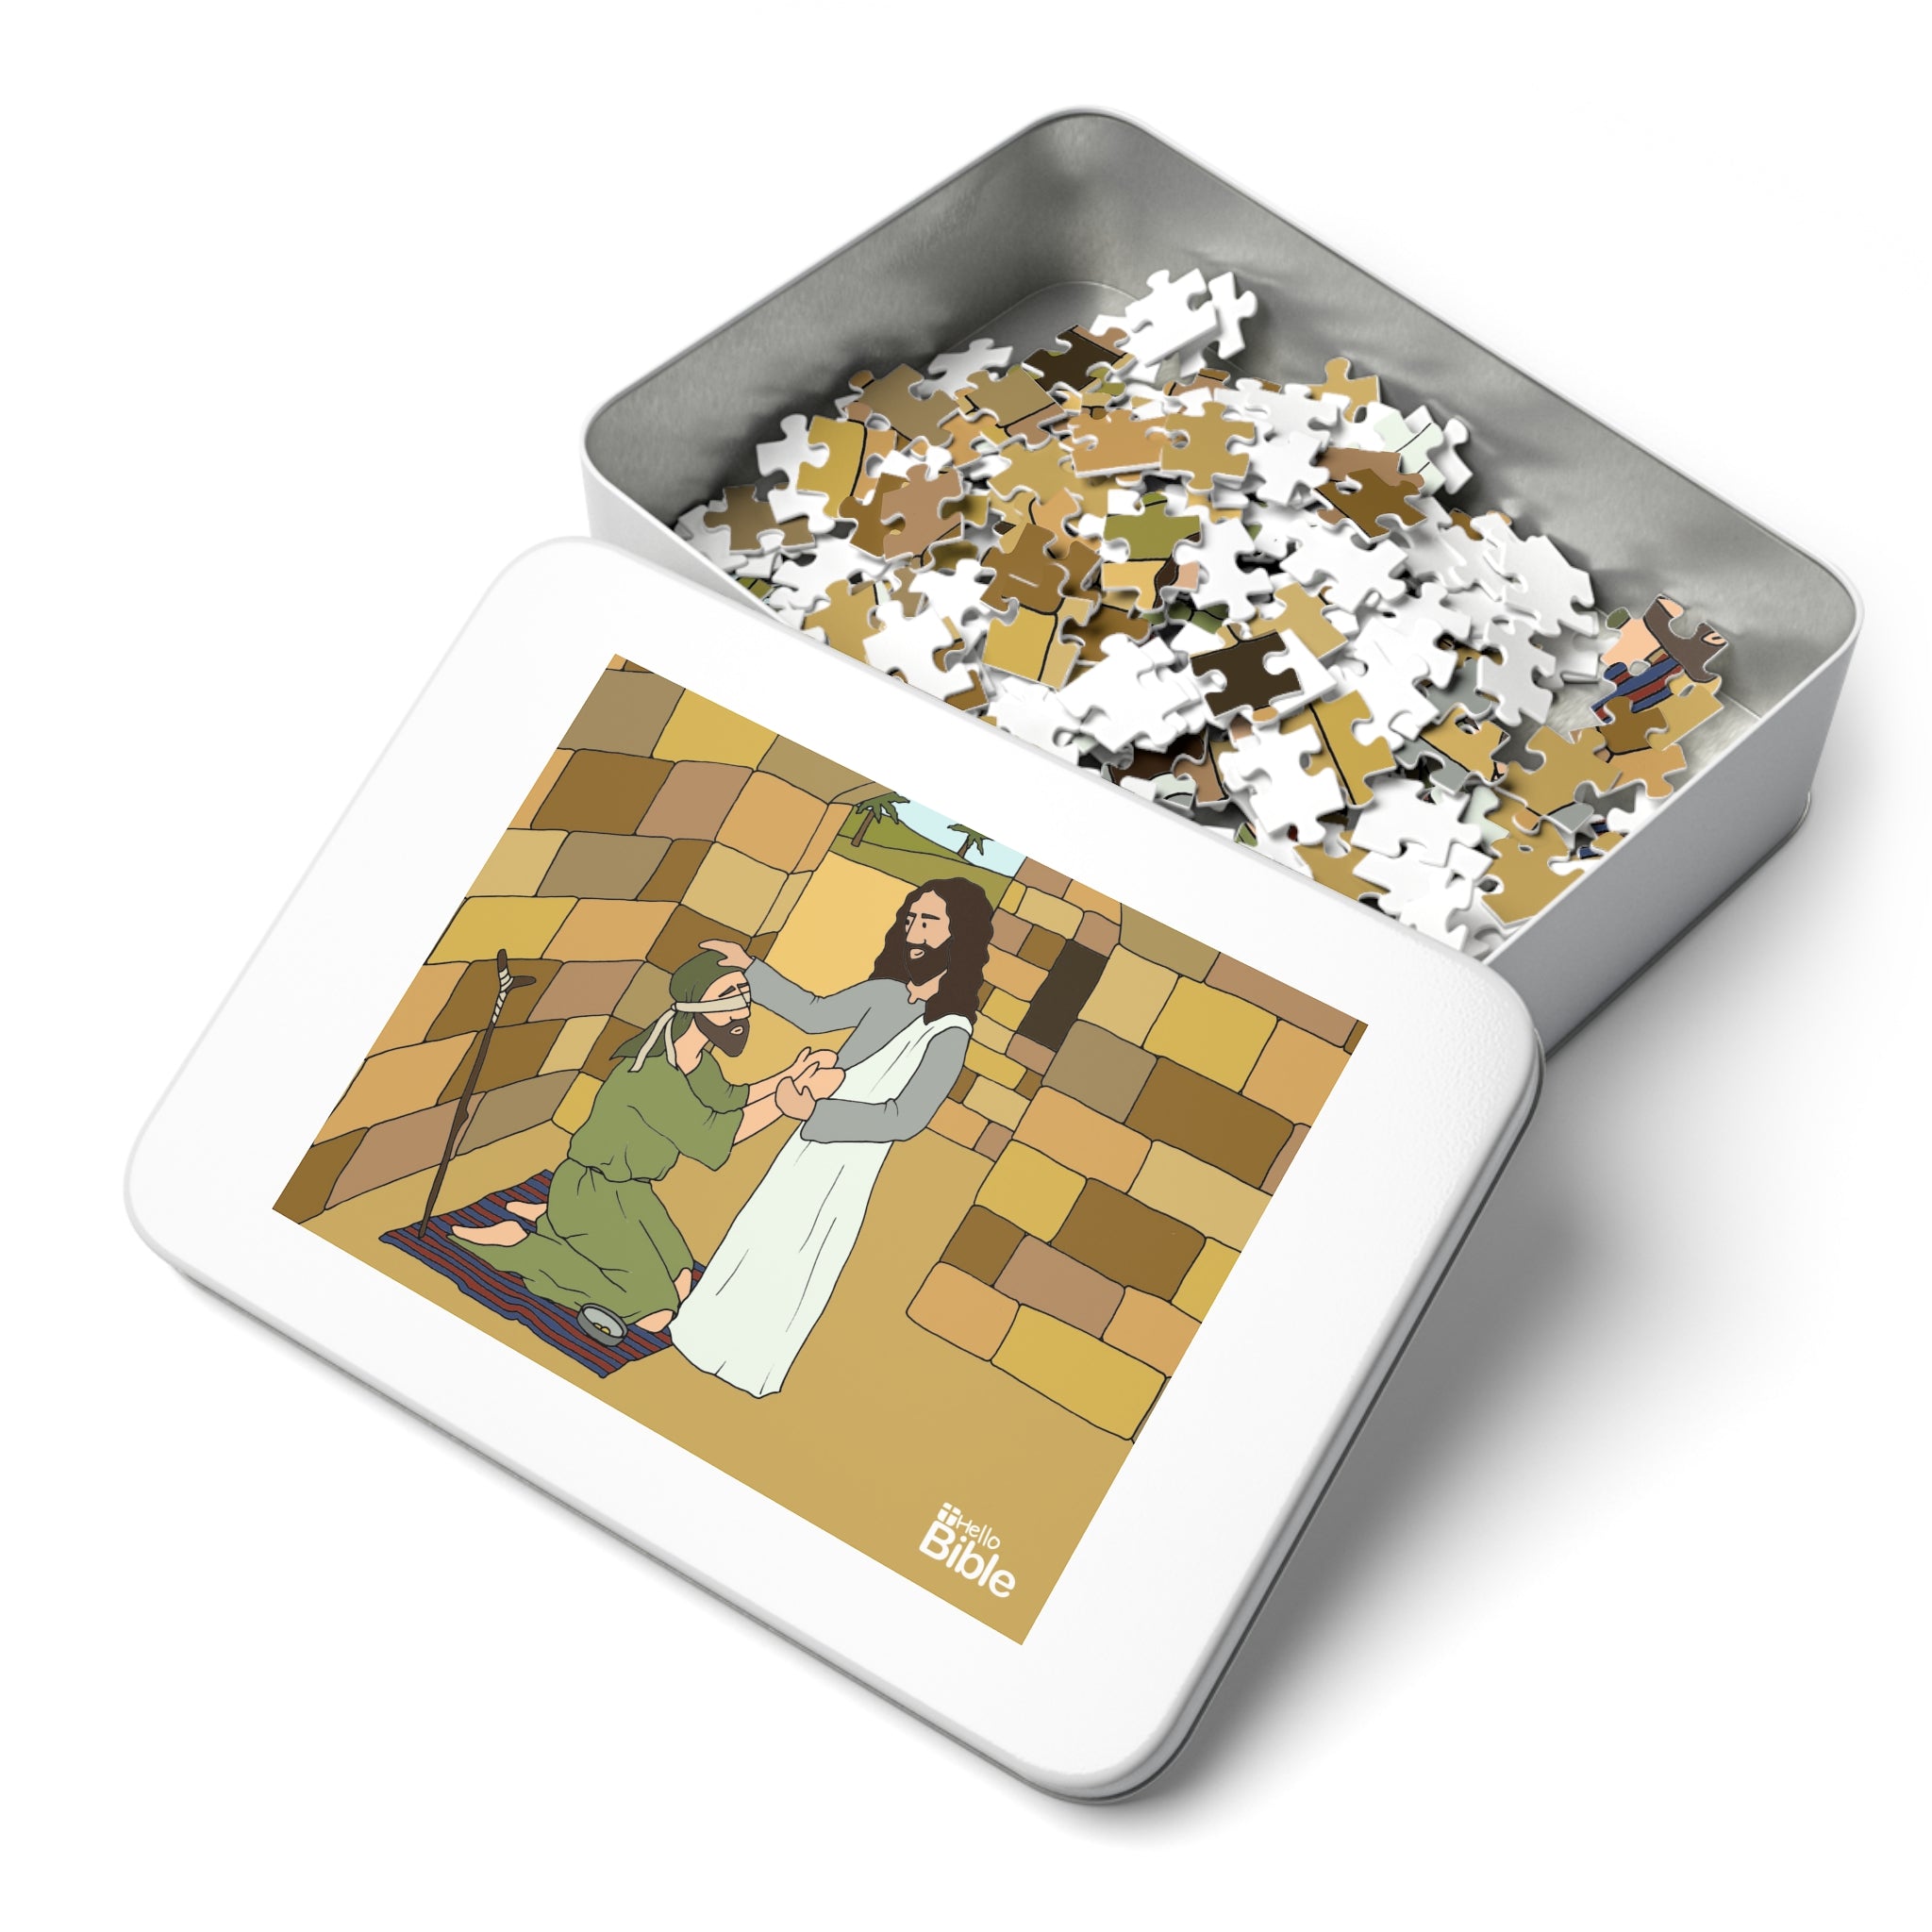 HelloBible Jesus heals Bartimaeus Jigsaw Puzzle (110, 252, or 500 piece)